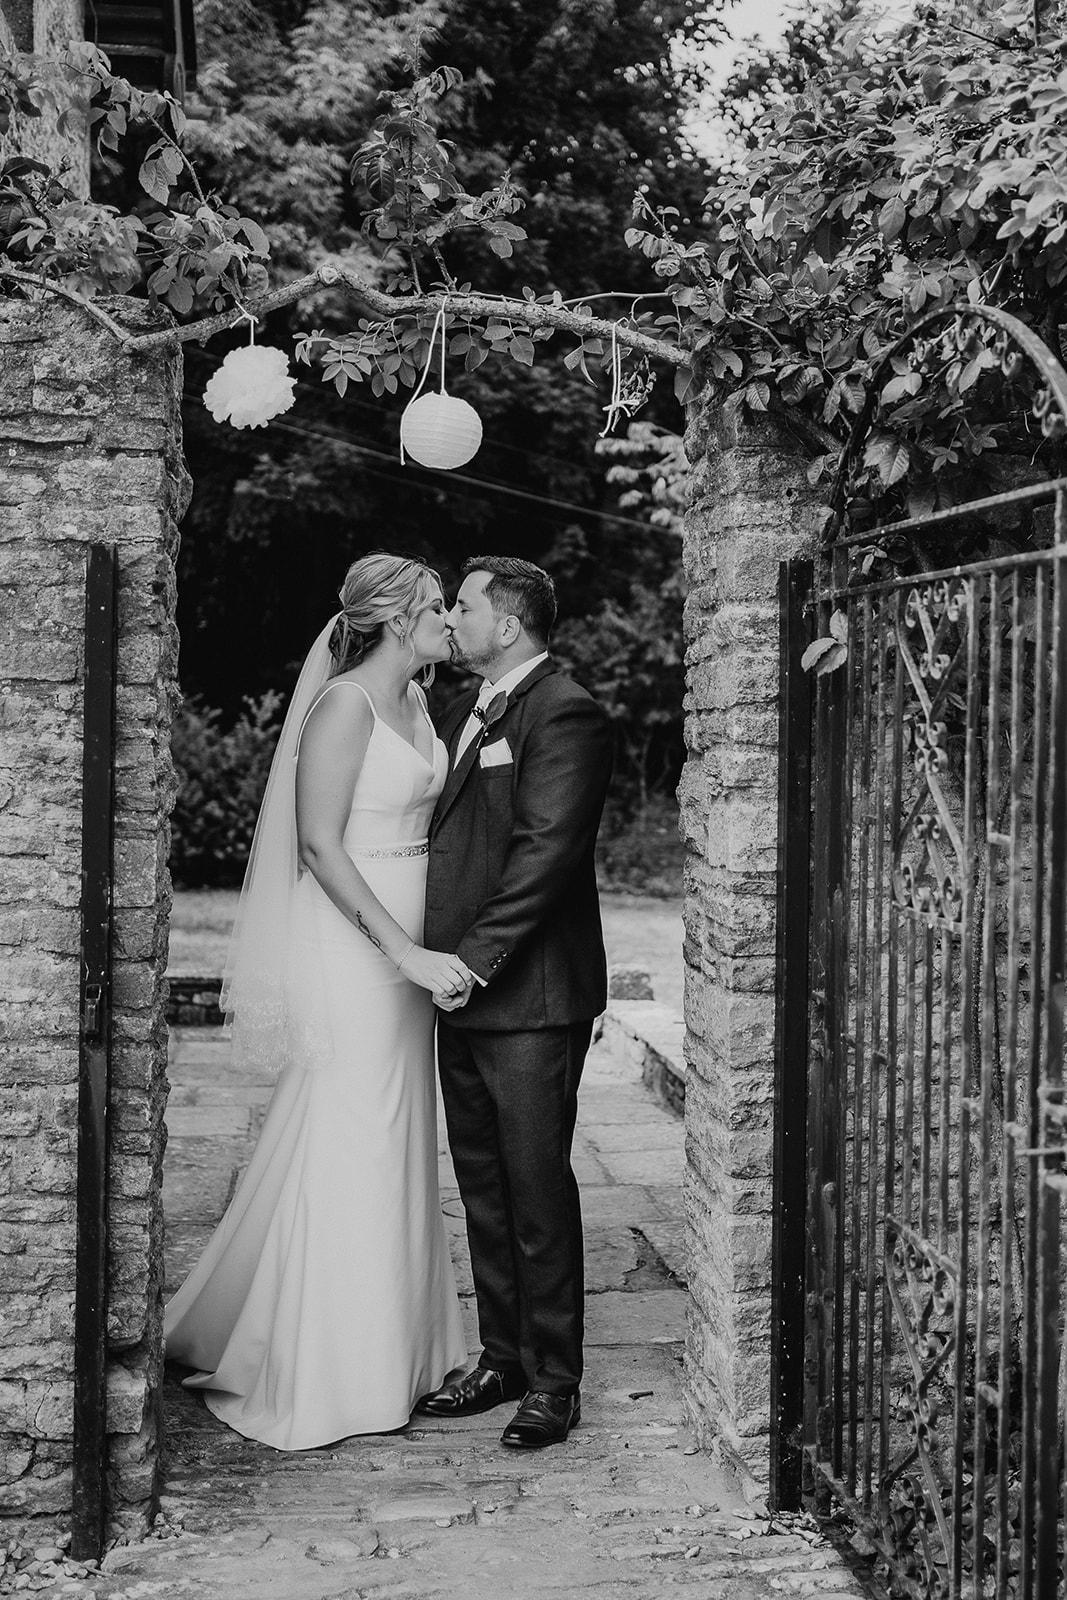 Couple photos in the gardens for an elegant Kingston Country Courtyard wedding